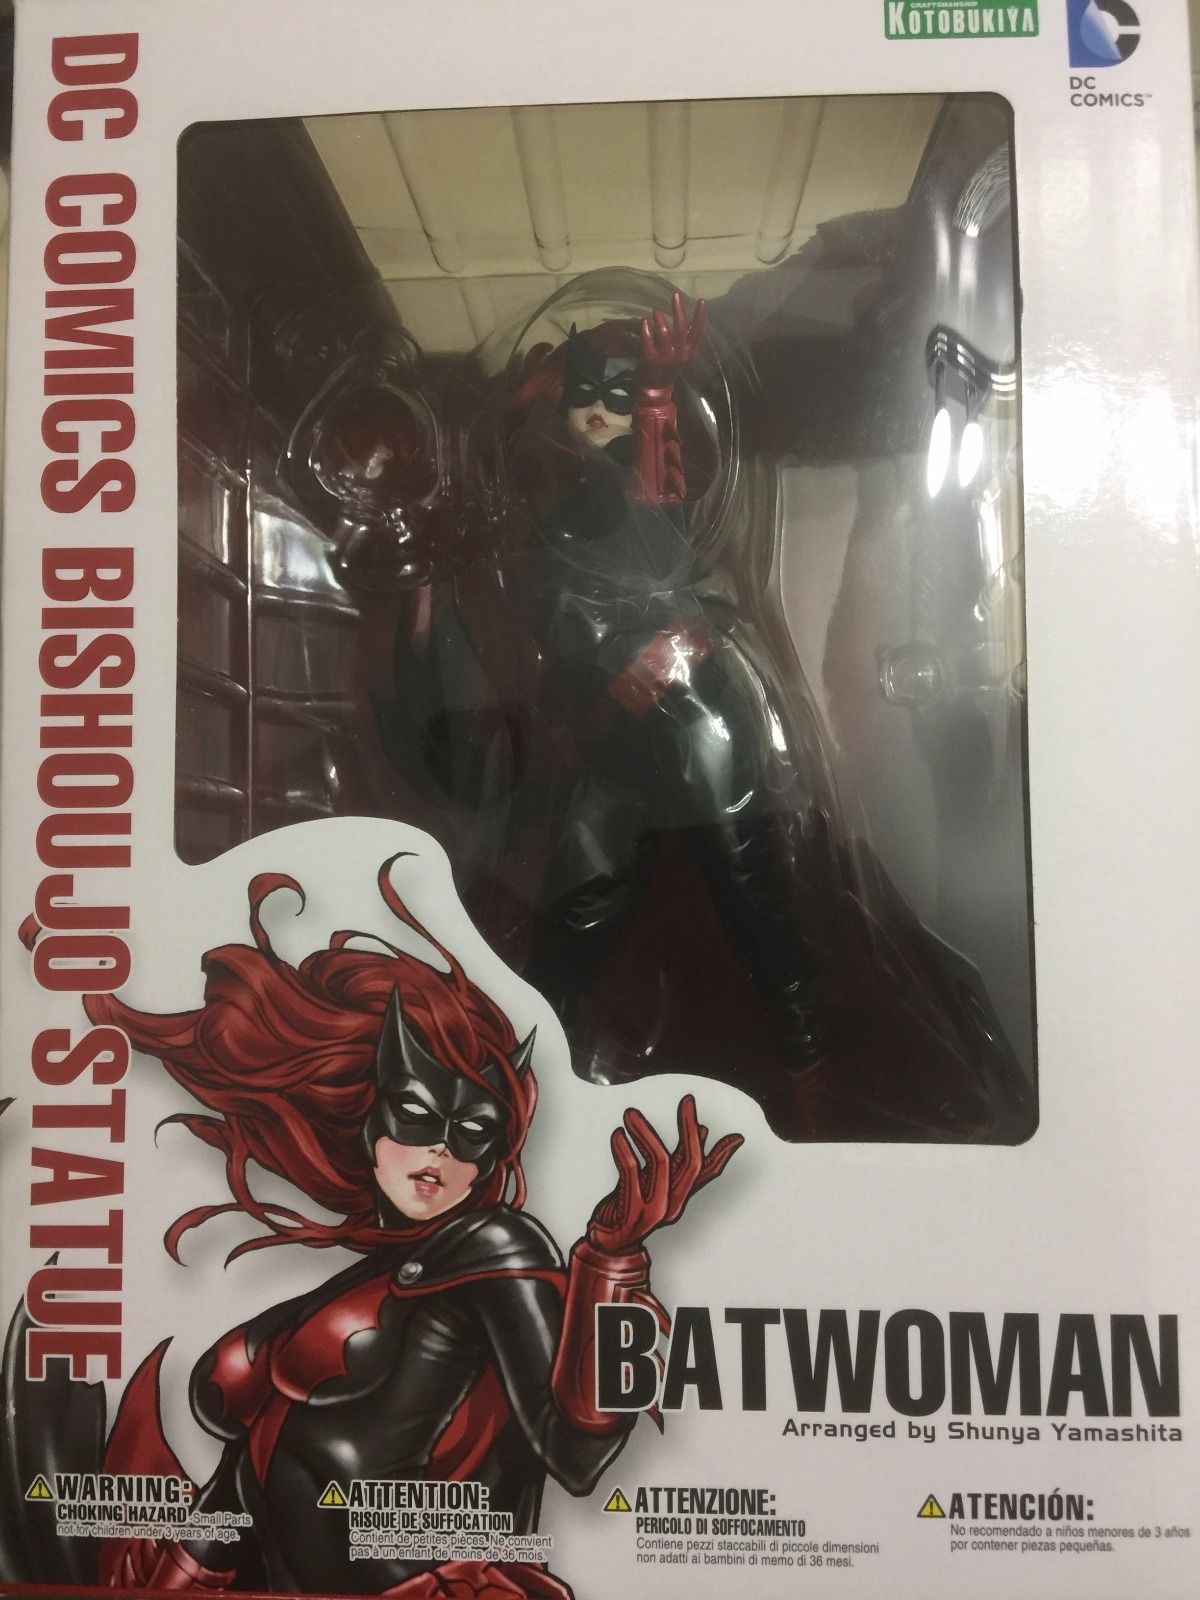 Kotobukiya DC Comics Batwoman Bishoujo Figure Open - Read 10% off offer LIKENEW